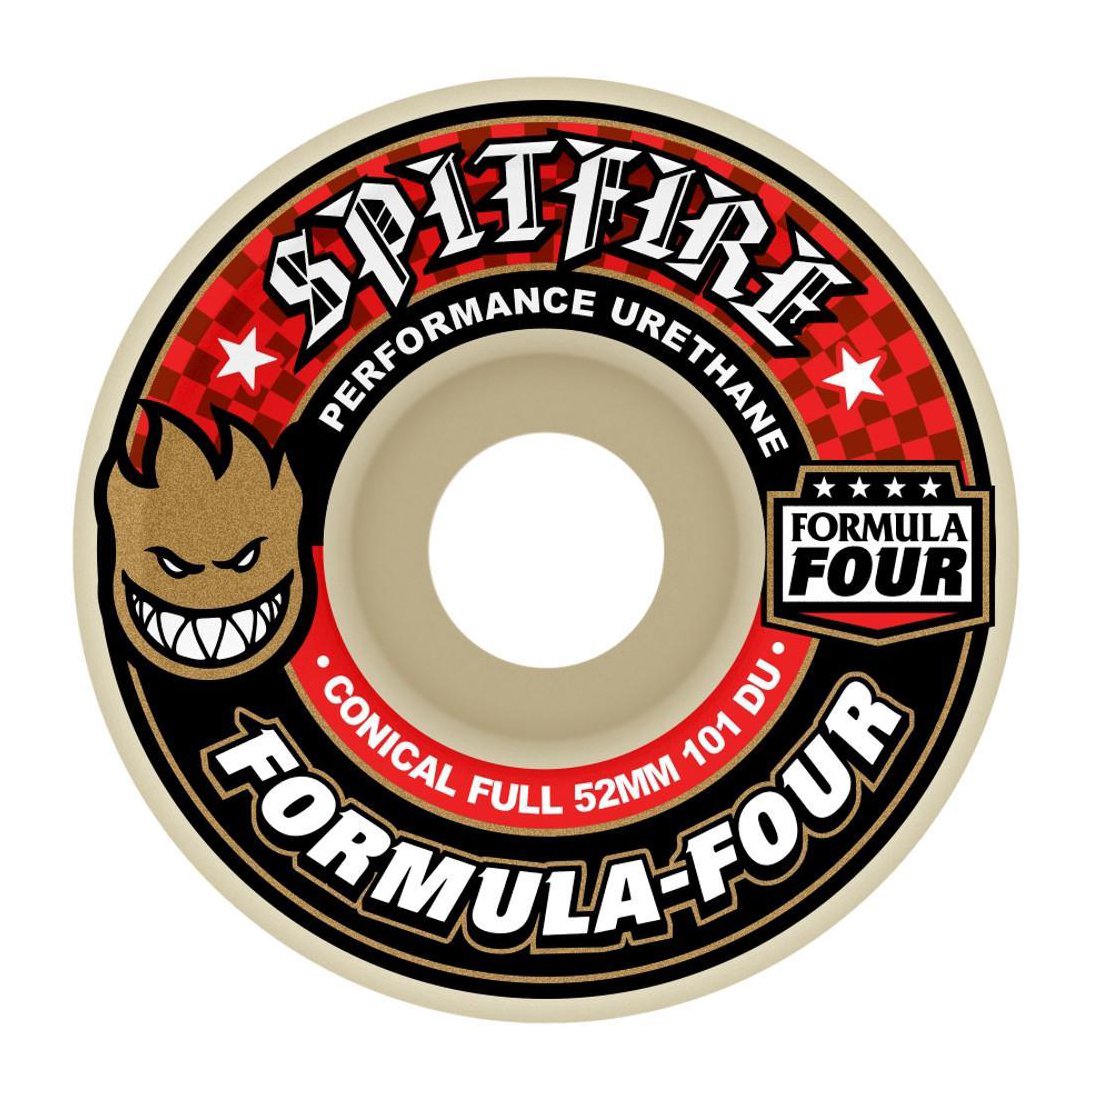 Spitfire Formula Four Conical Full 52m